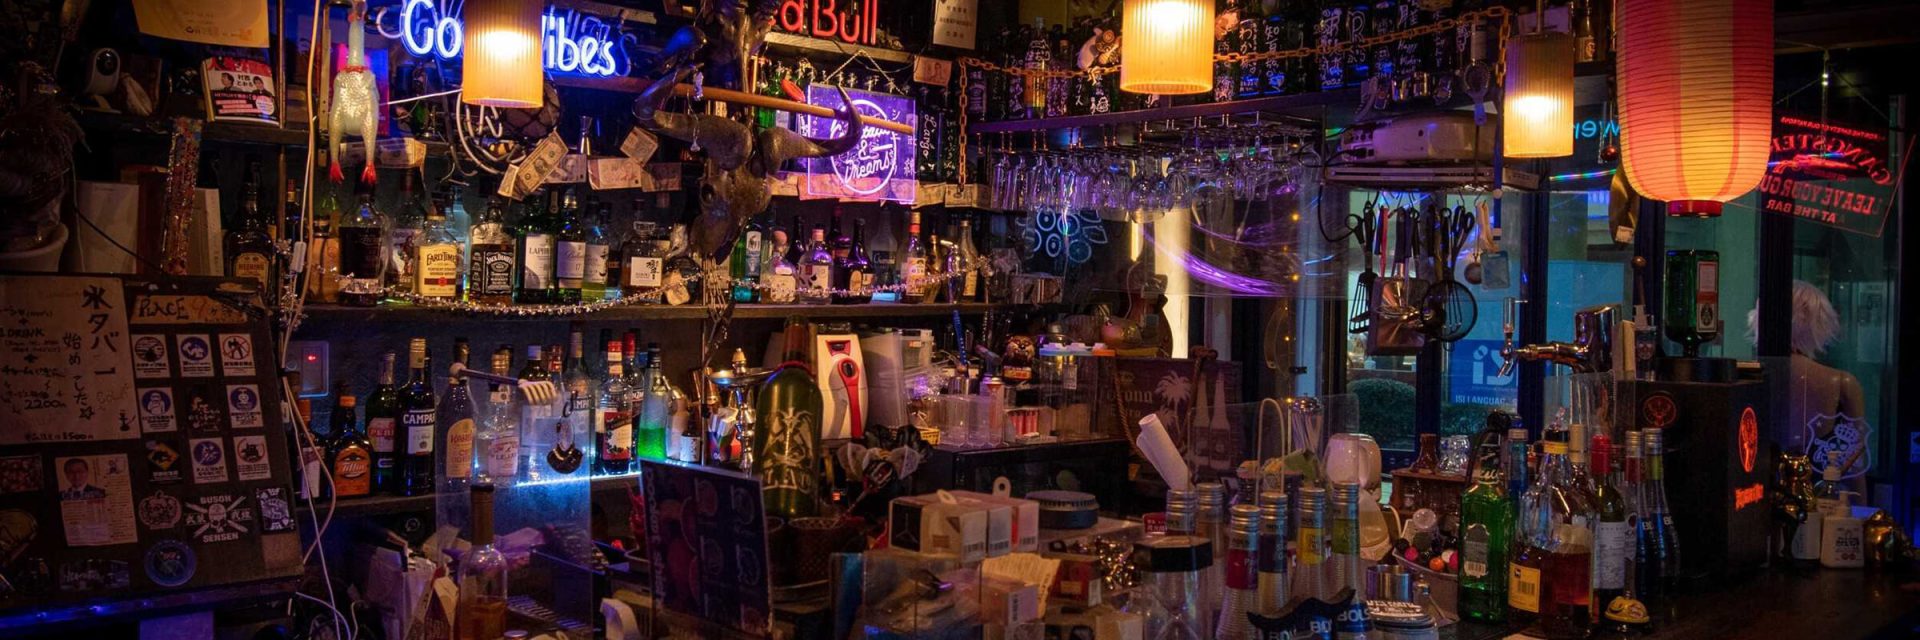 Bar Place